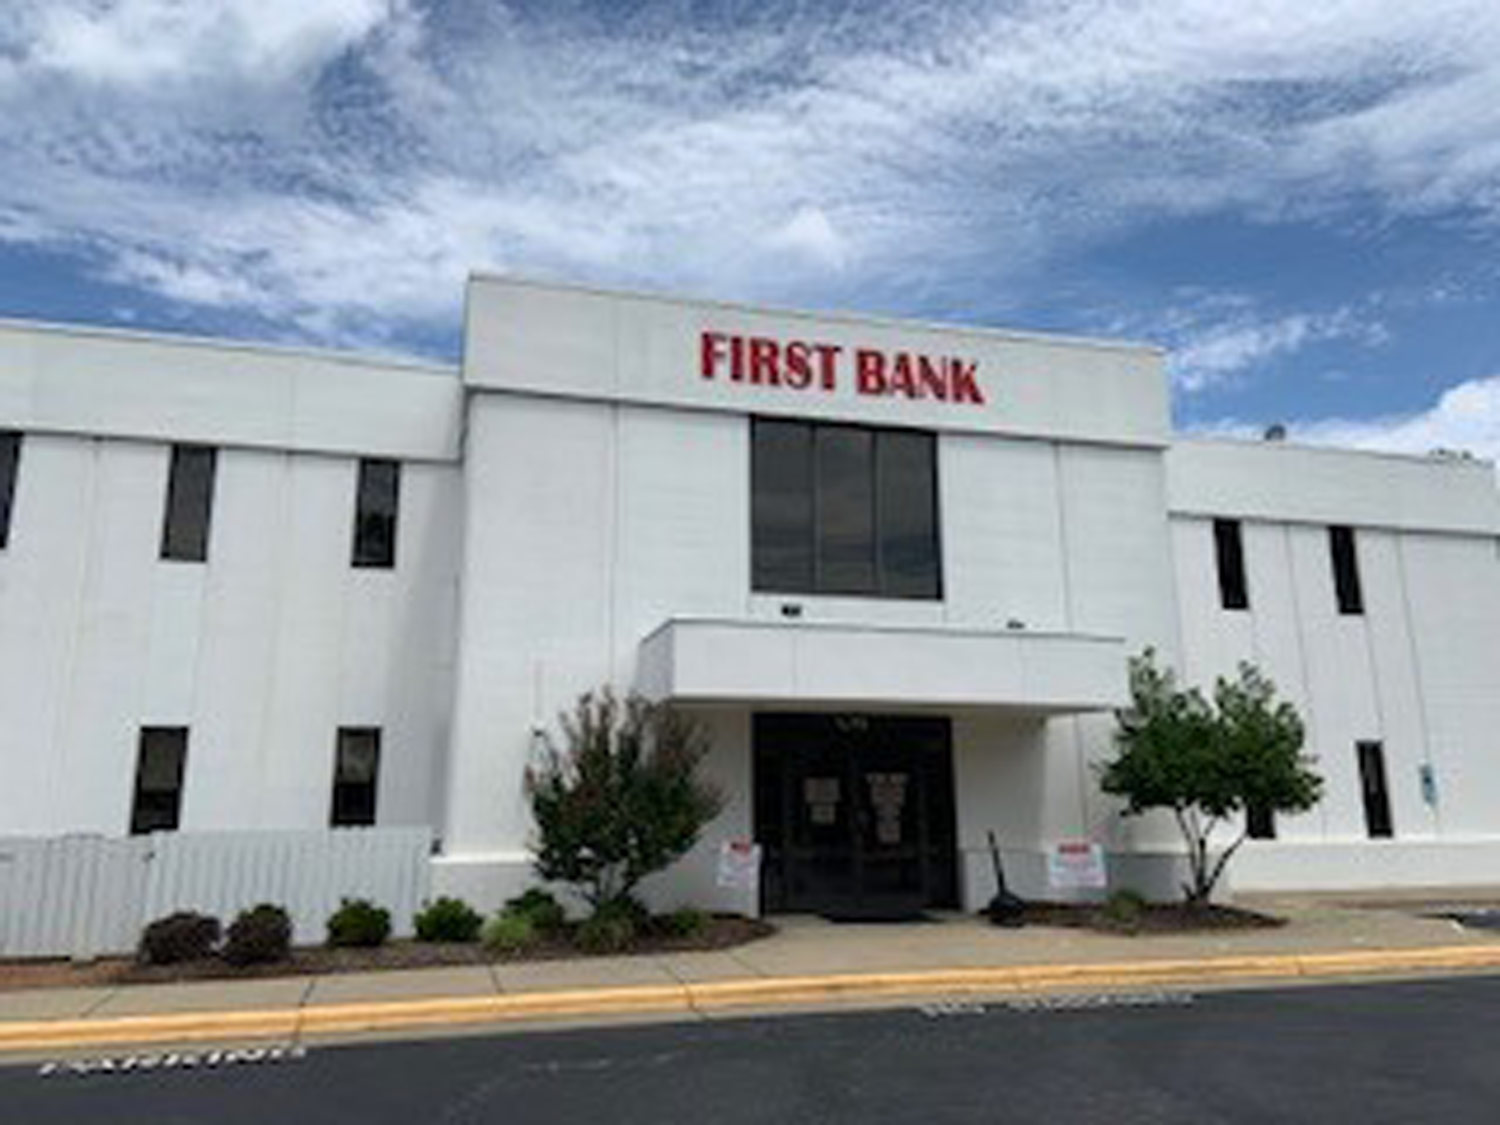 First Bank - High Point, NC